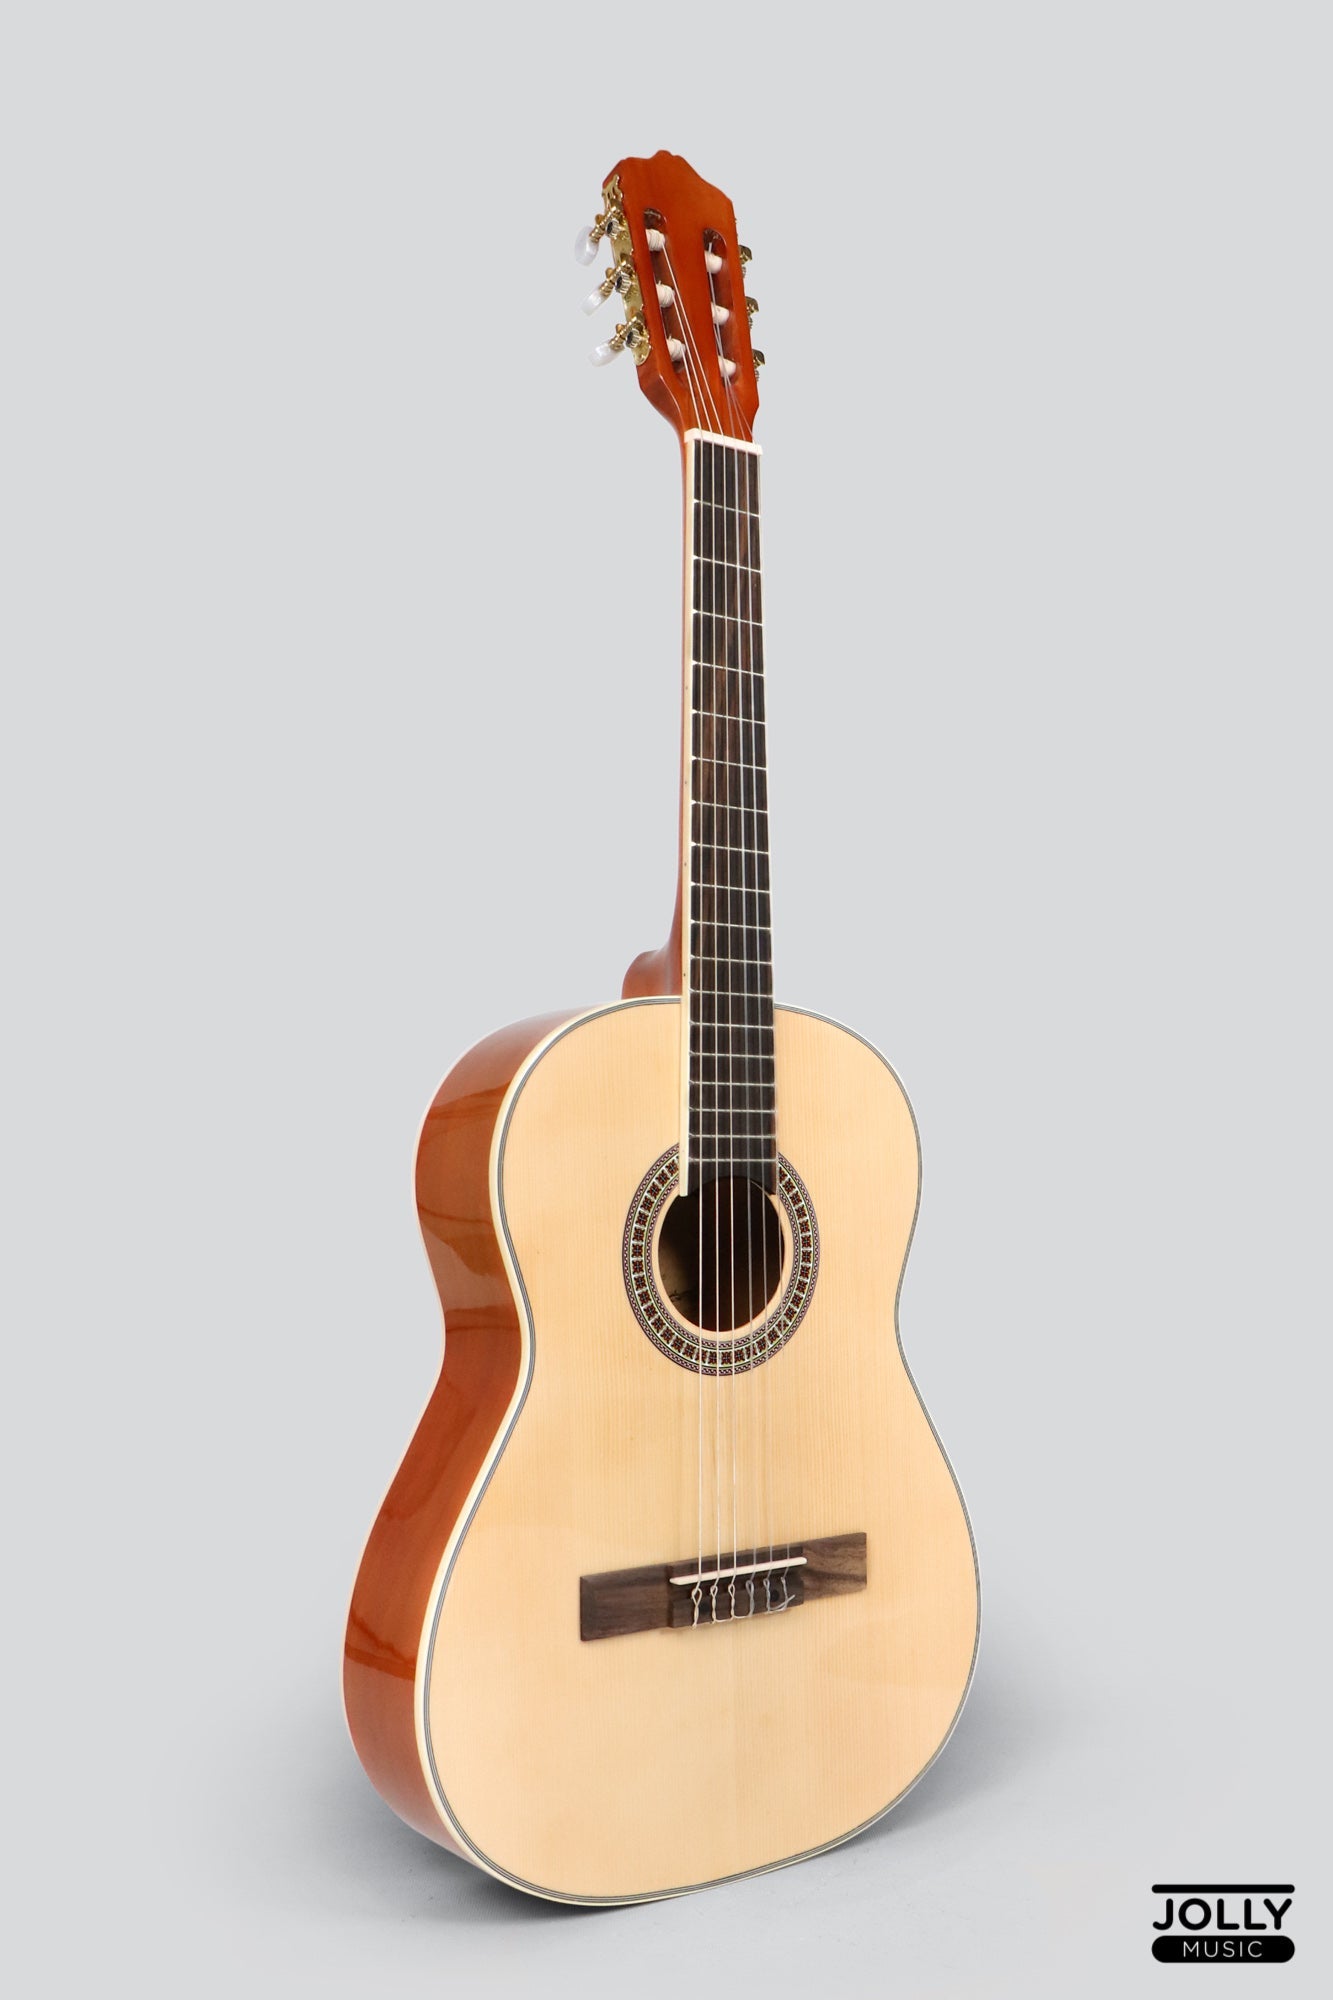 Deviser L-310 Classical Guitar (Natural) 3/4 Size